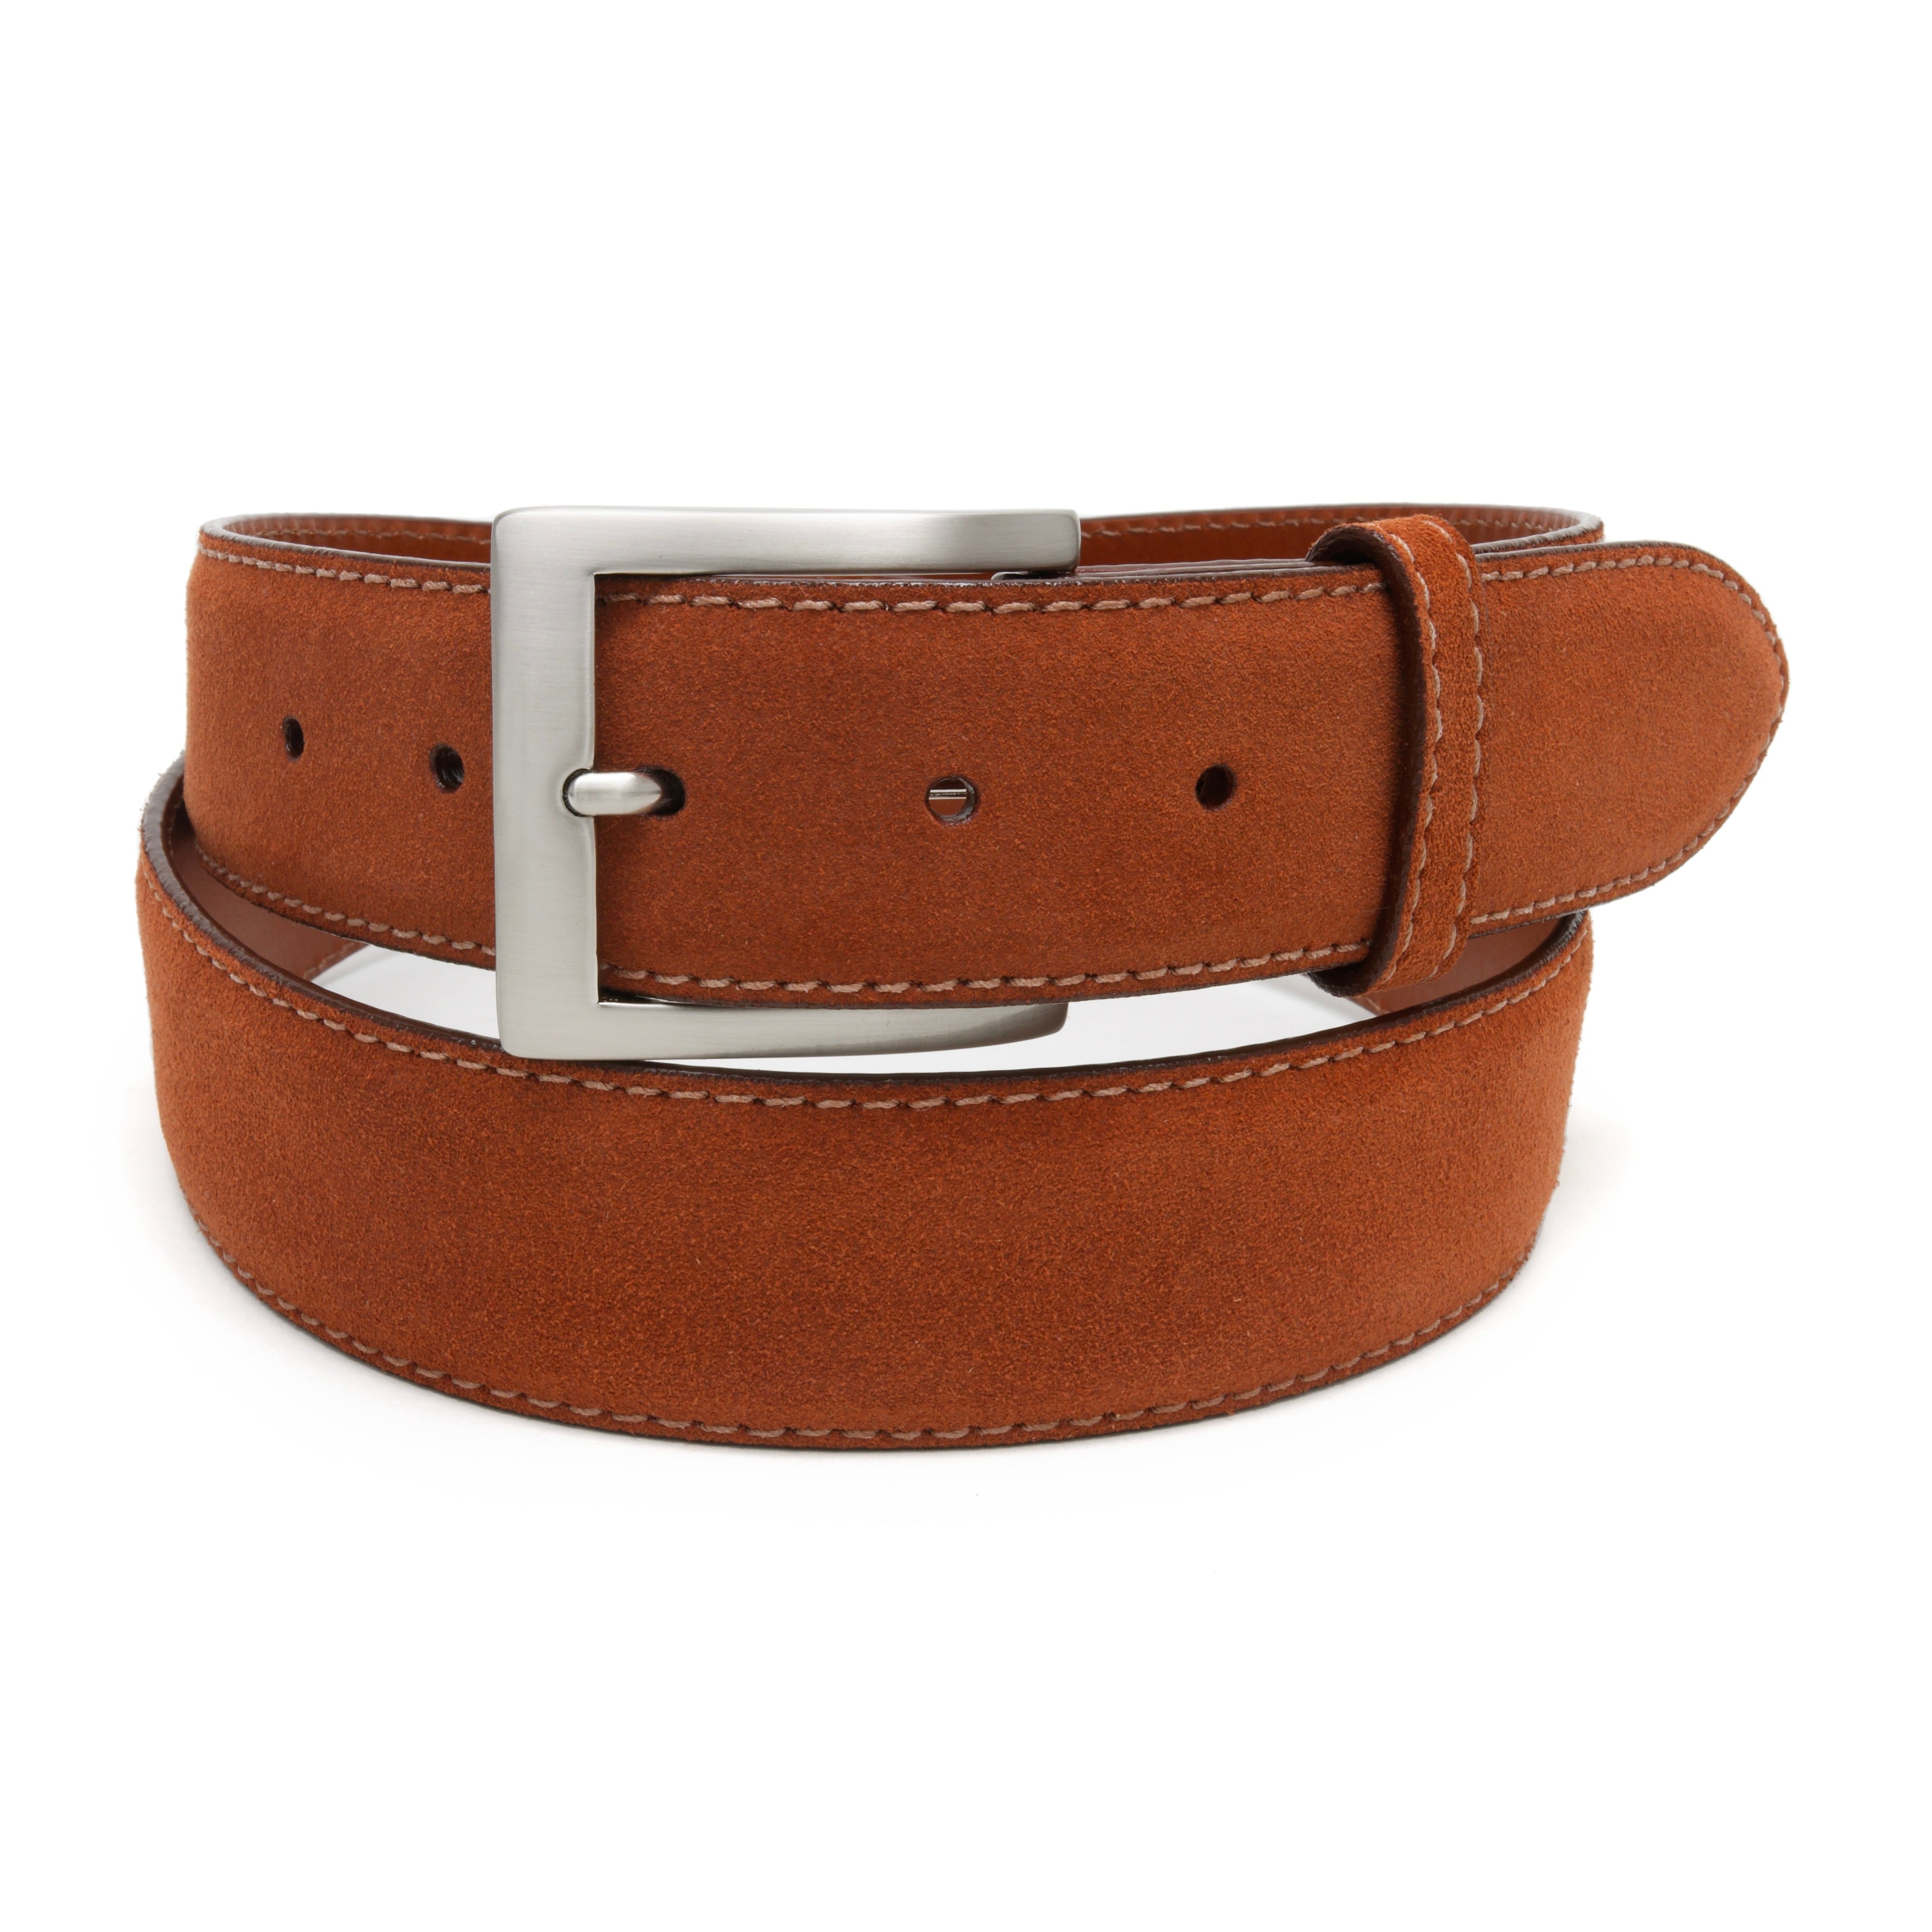 light brown suede belt